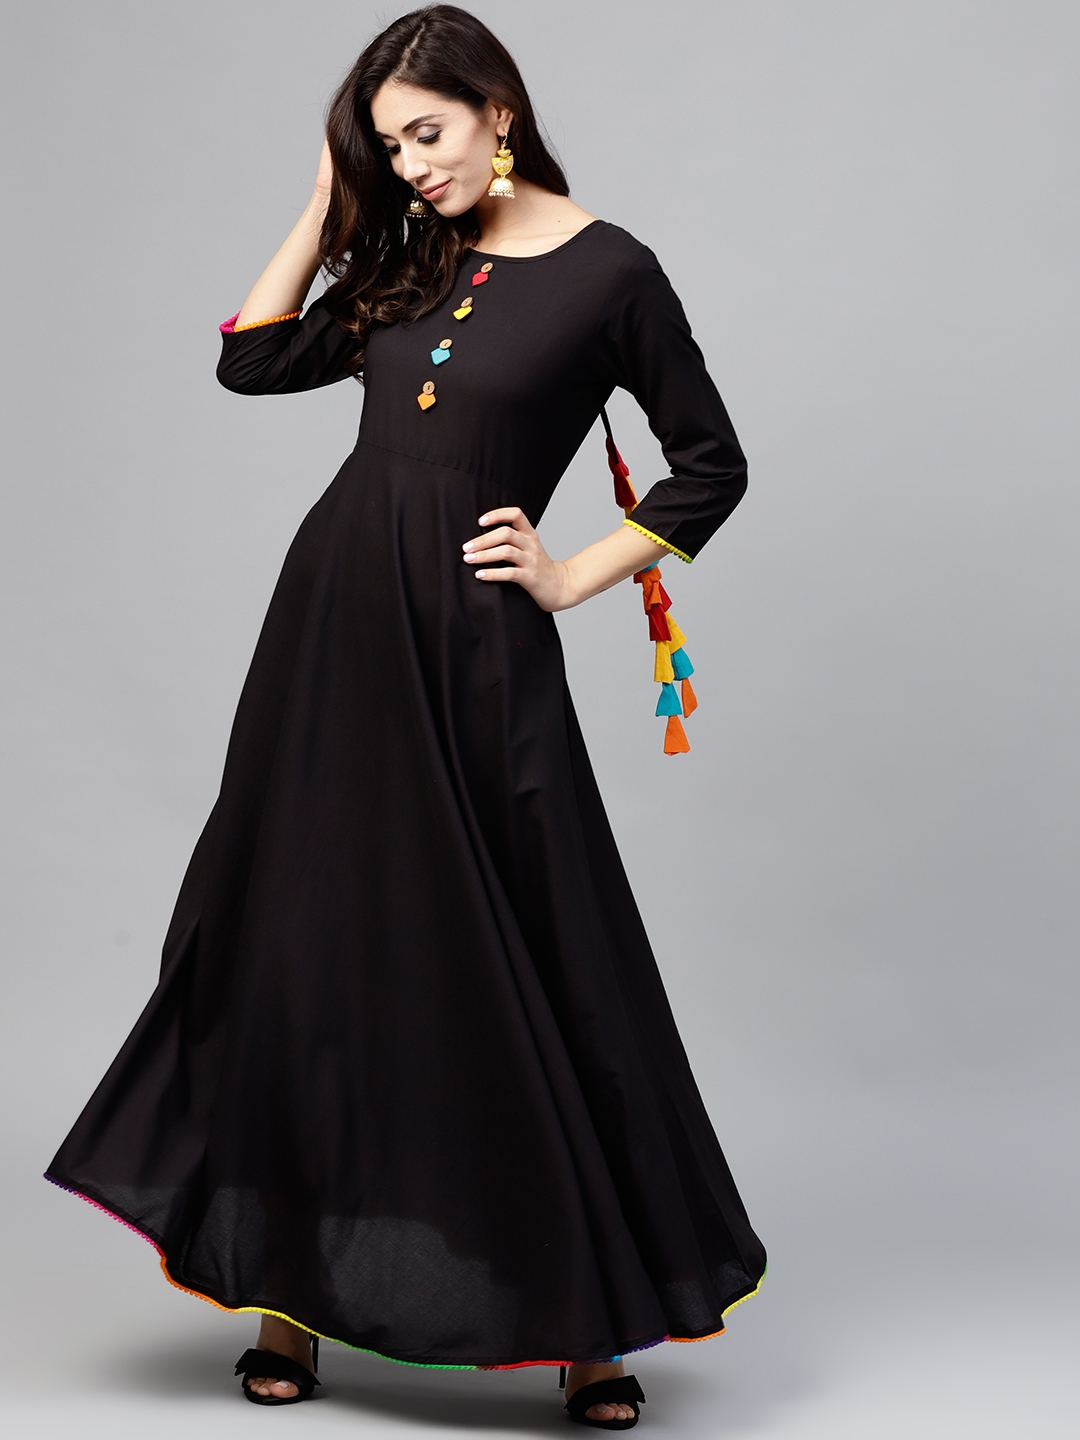 Nayo Black Cotton Maxi Dress - Dresses ...